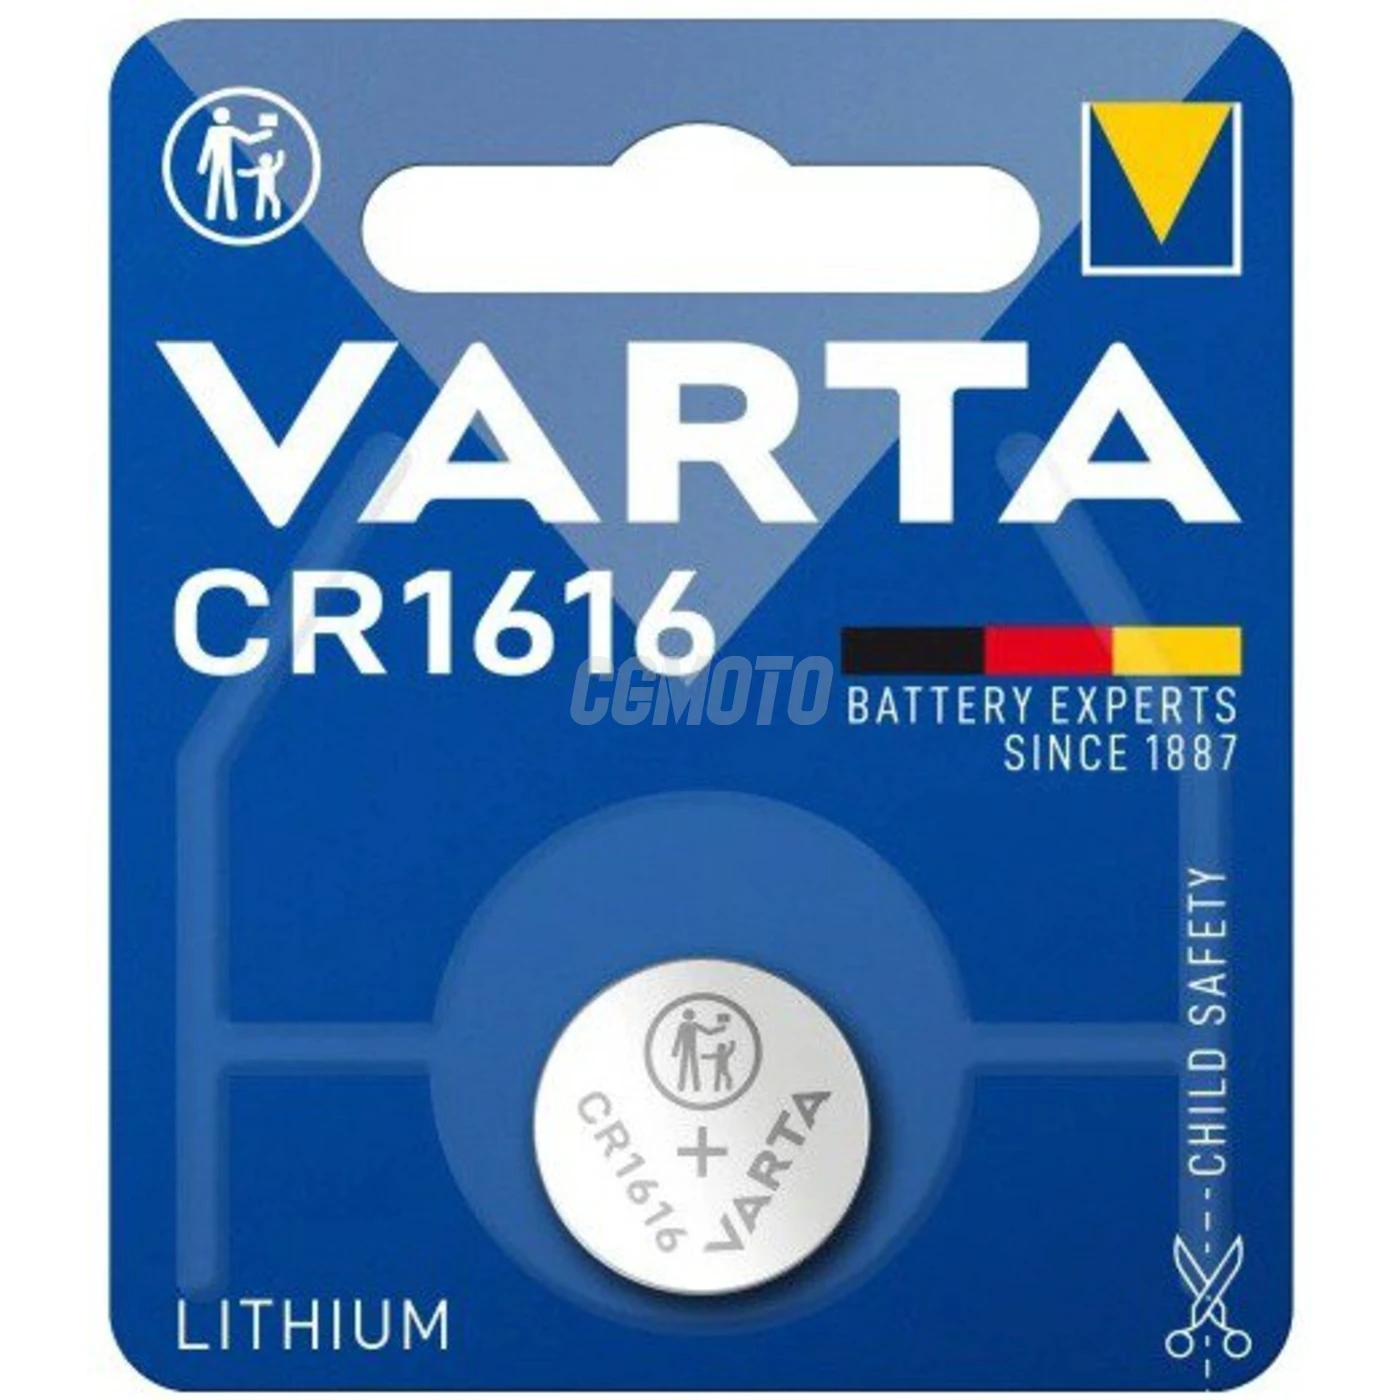 Varta CR1616 lithium x 1 pila (blister)